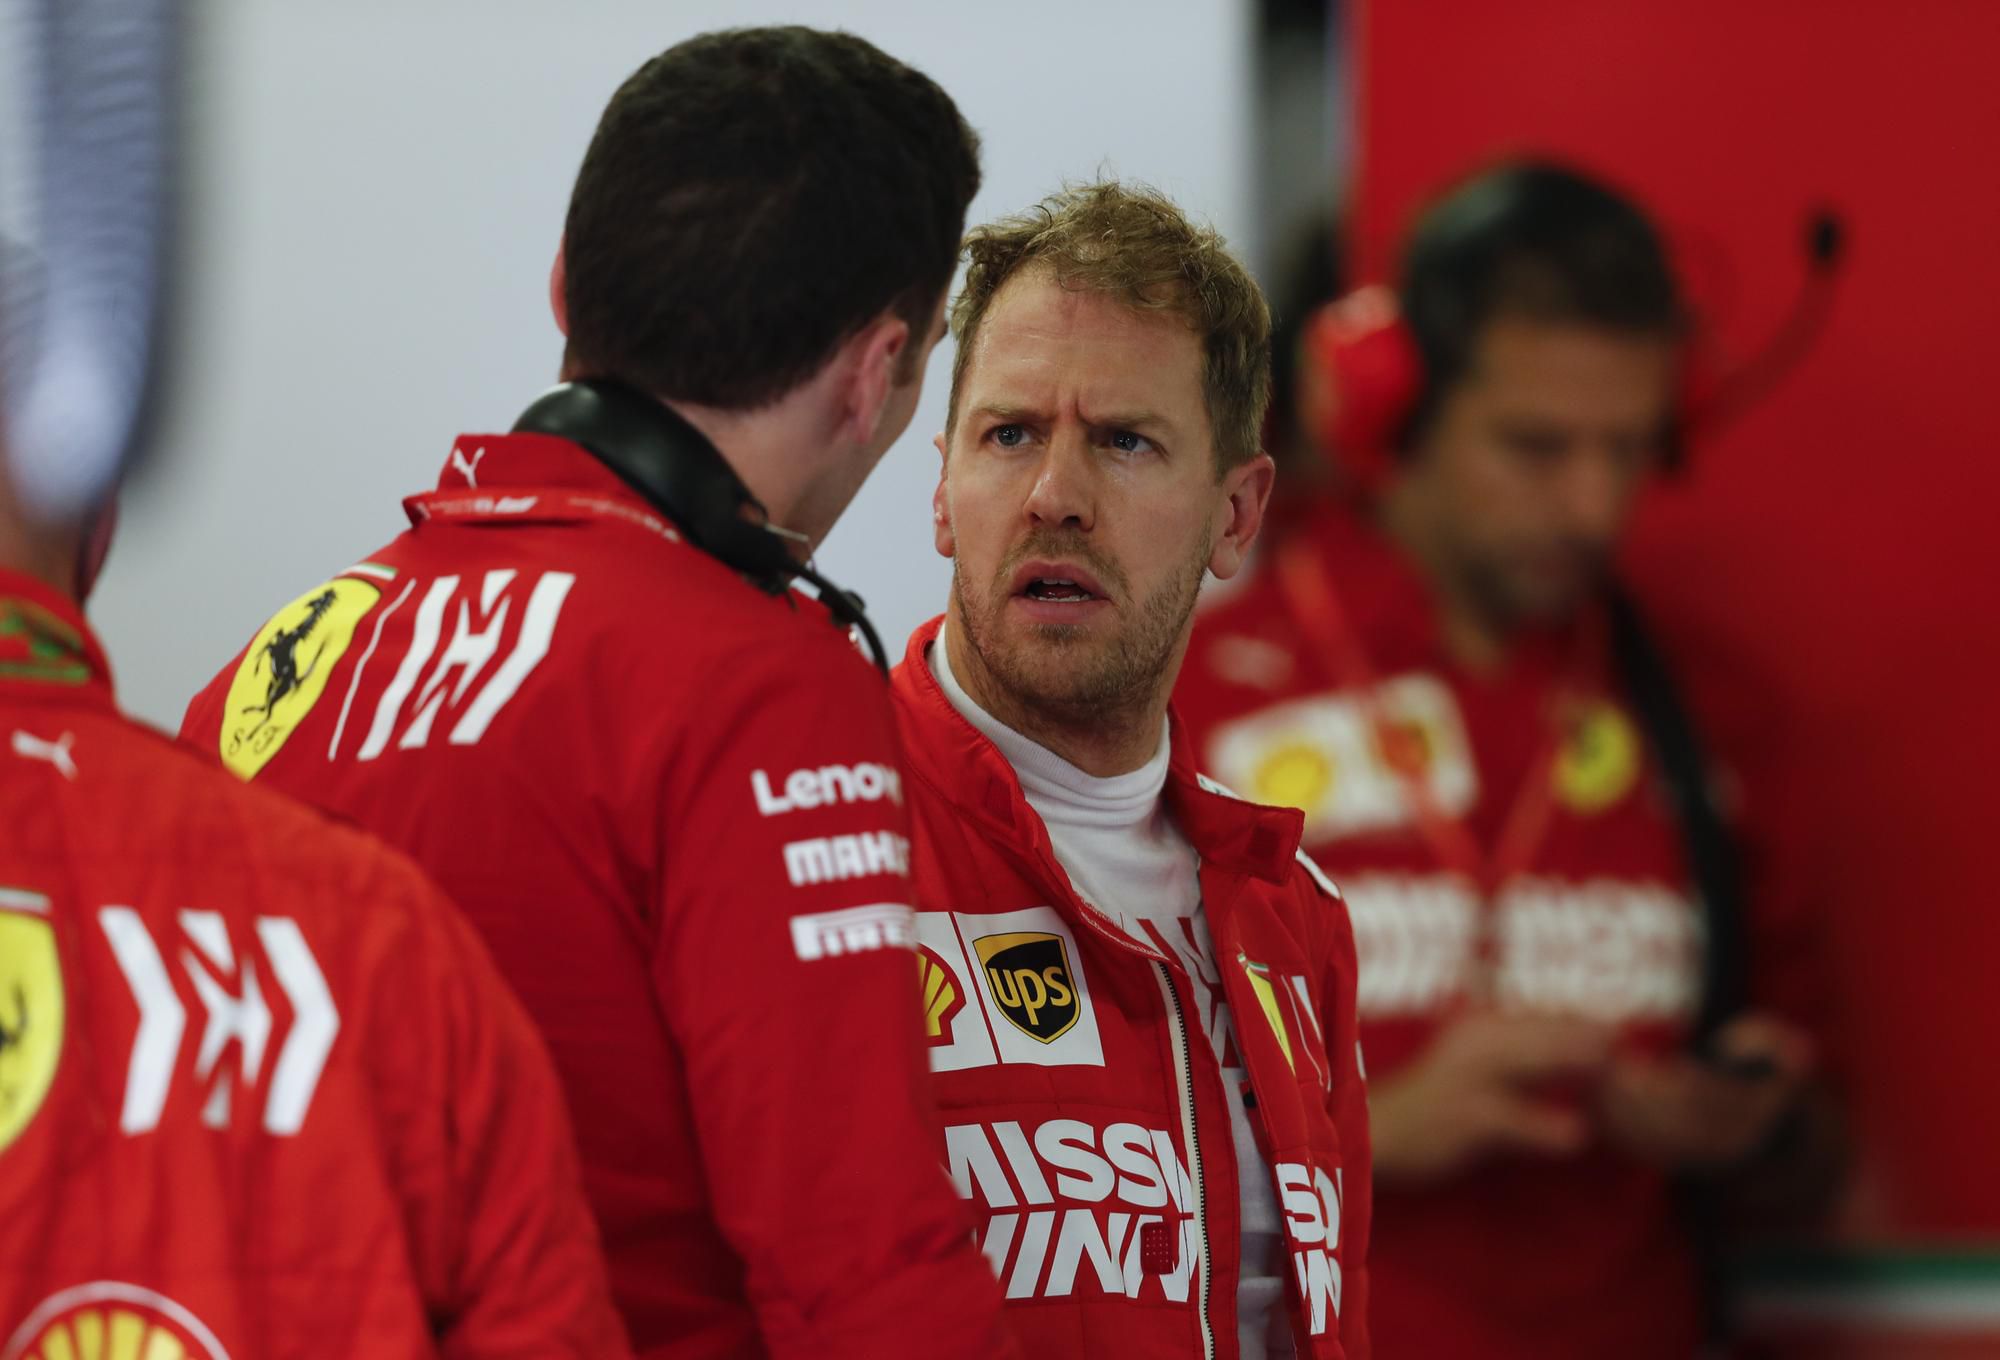 Nemecký pilot Formuly 1 Sebastian Vettel na Ferrari.